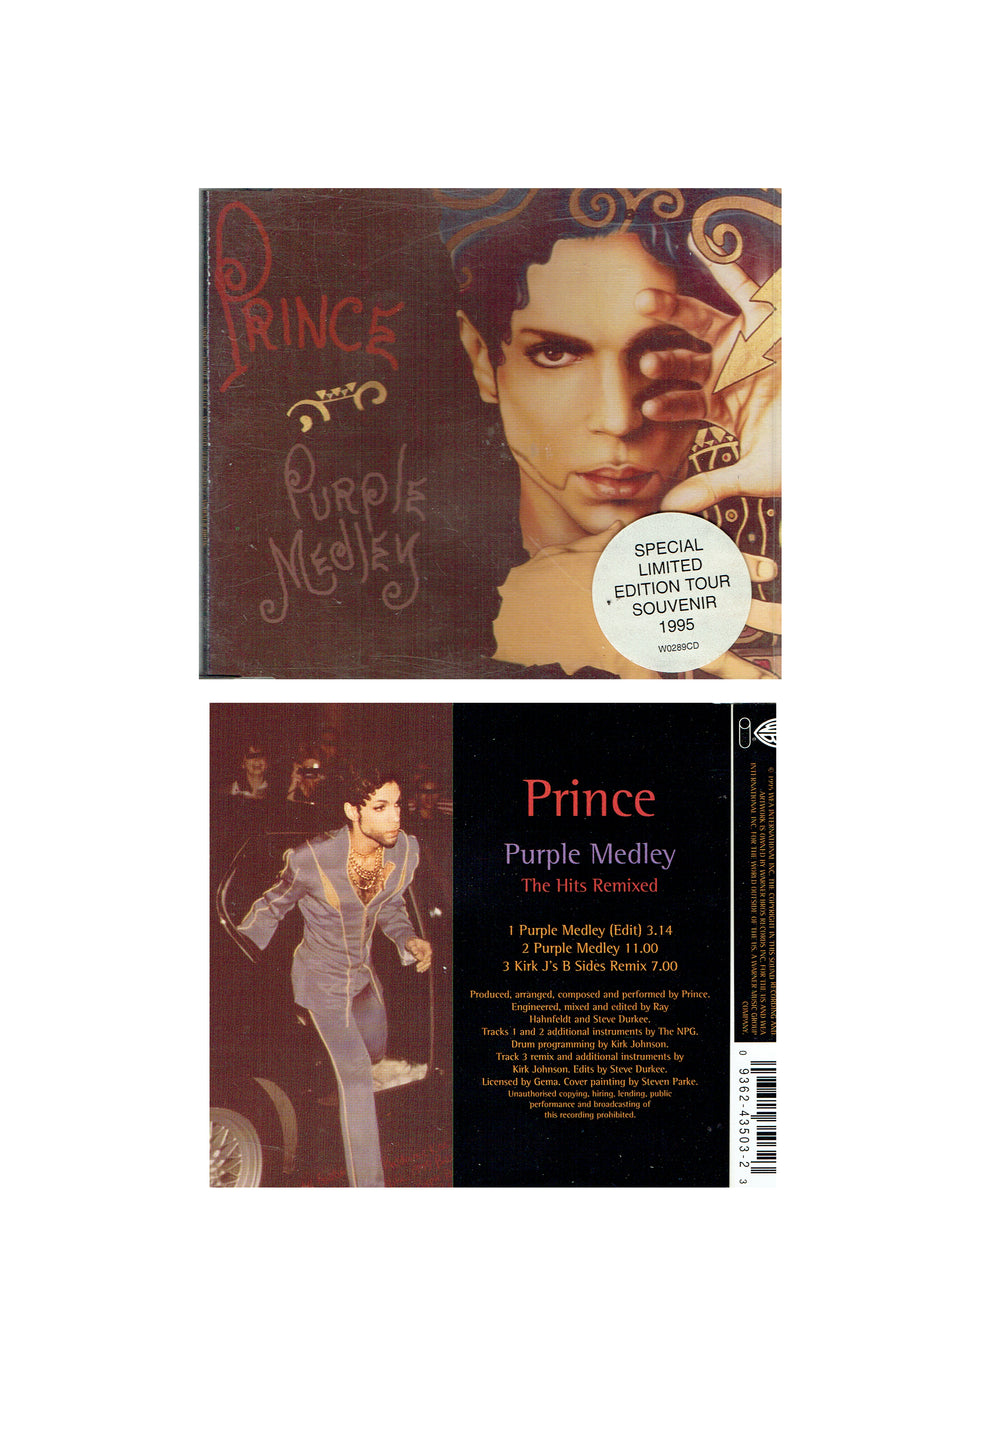 Prince Purple Medley Tour Souvenir CD Single 1995 Original 3 Tracks with HYPE